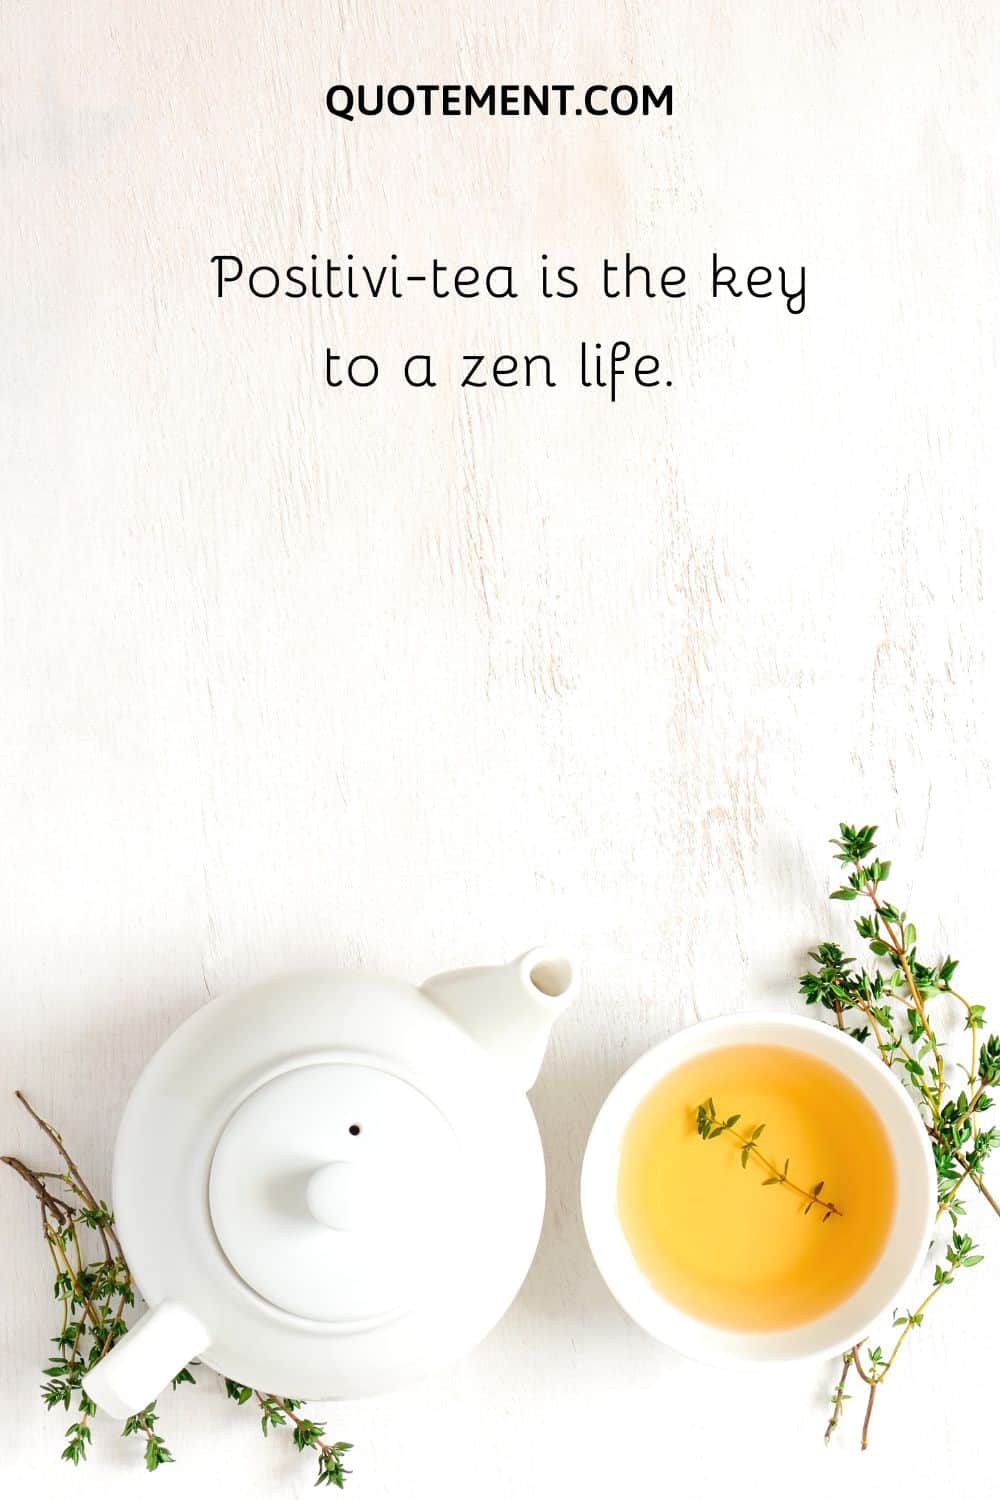 Positivi-tea is the key to a zen life.